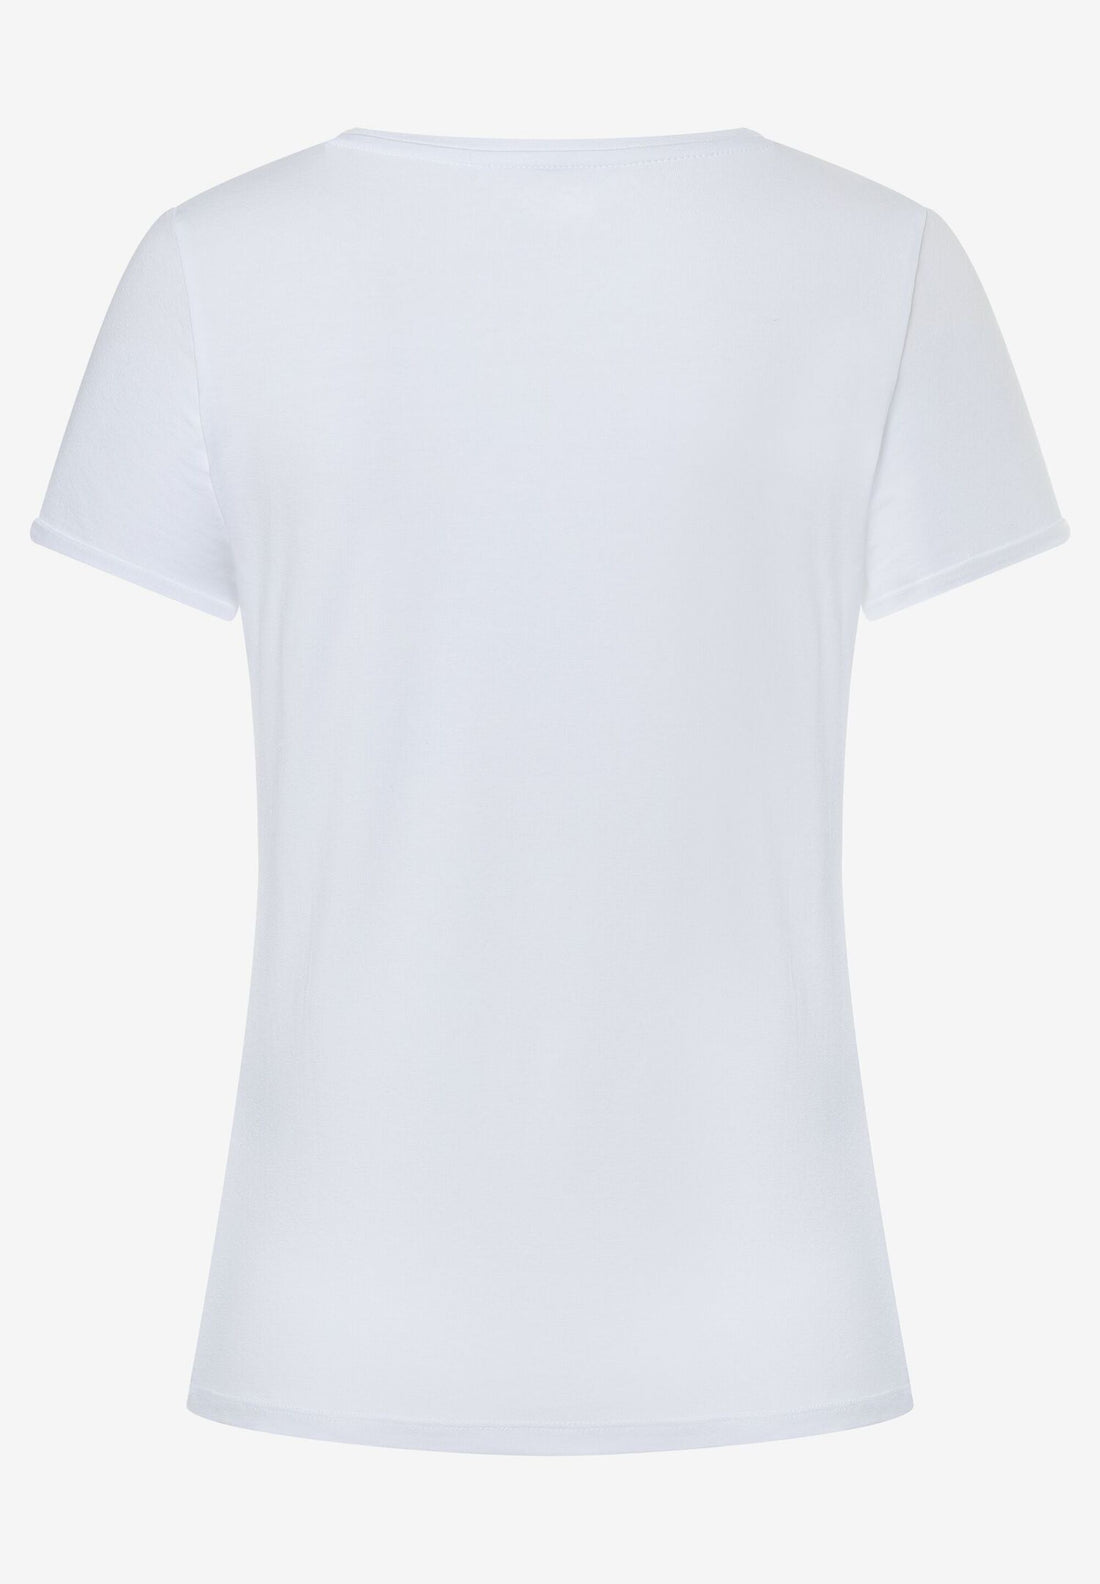 White T-Shirt With Metallic Design